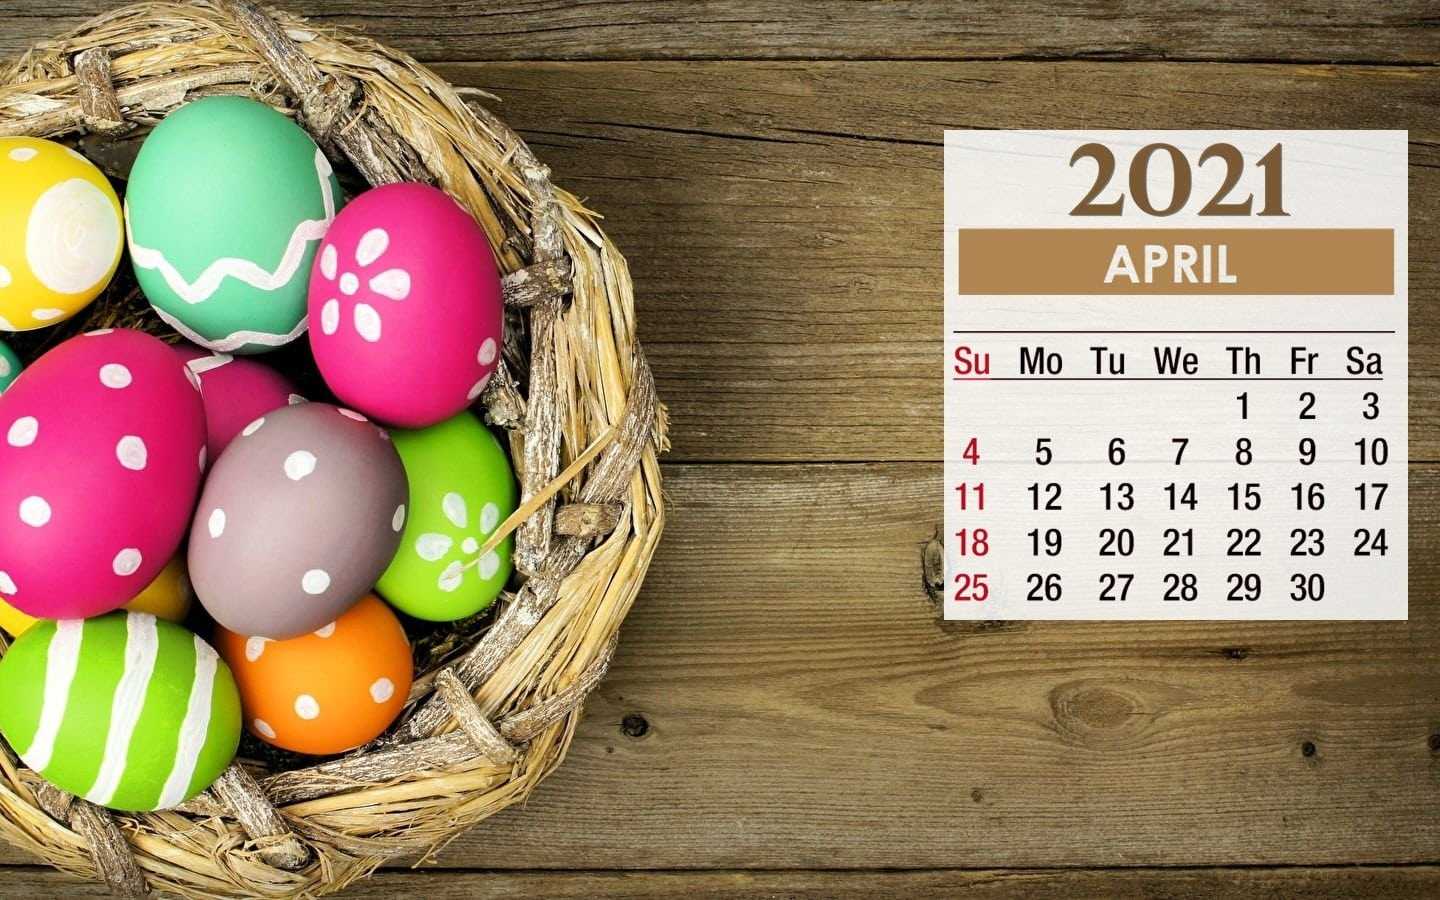 2021 Easter April Calendar Wallpaper - KoLPaPer - Awesome Free HD